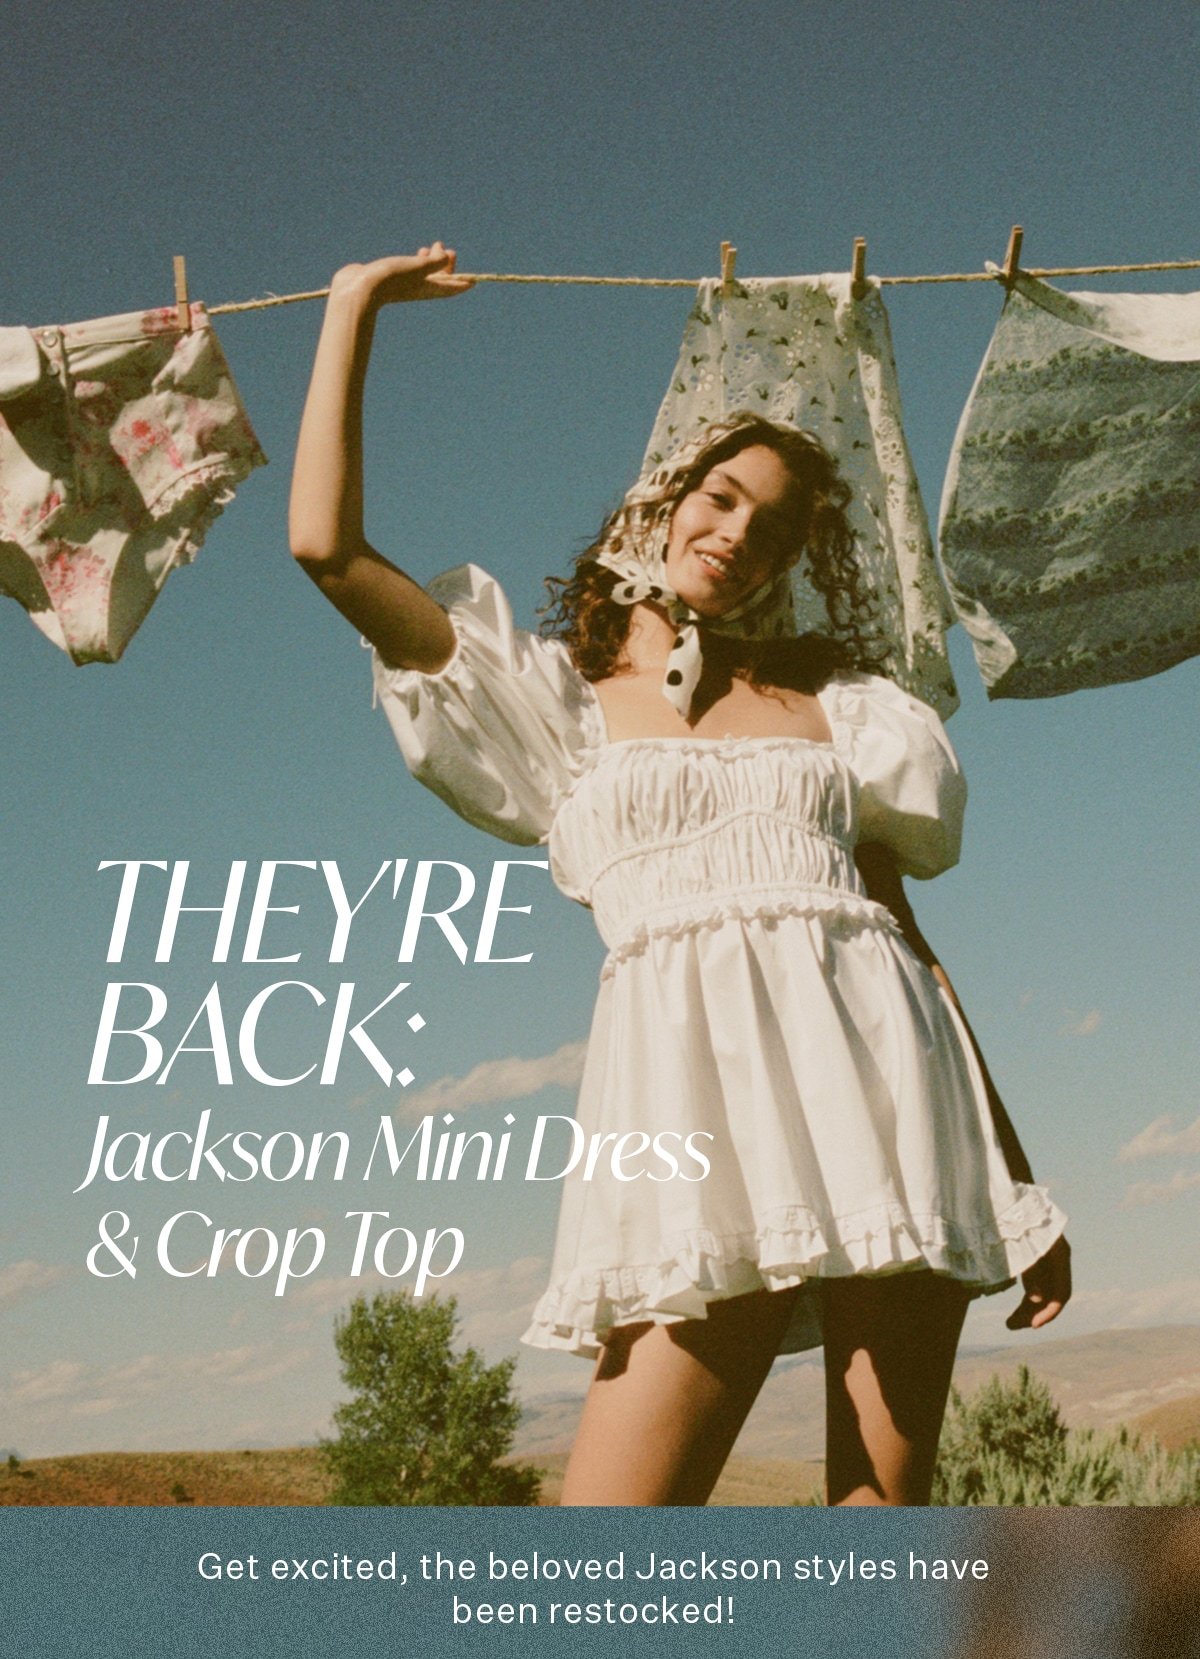 Jackson Mini Dress ☀ Crop Top ...